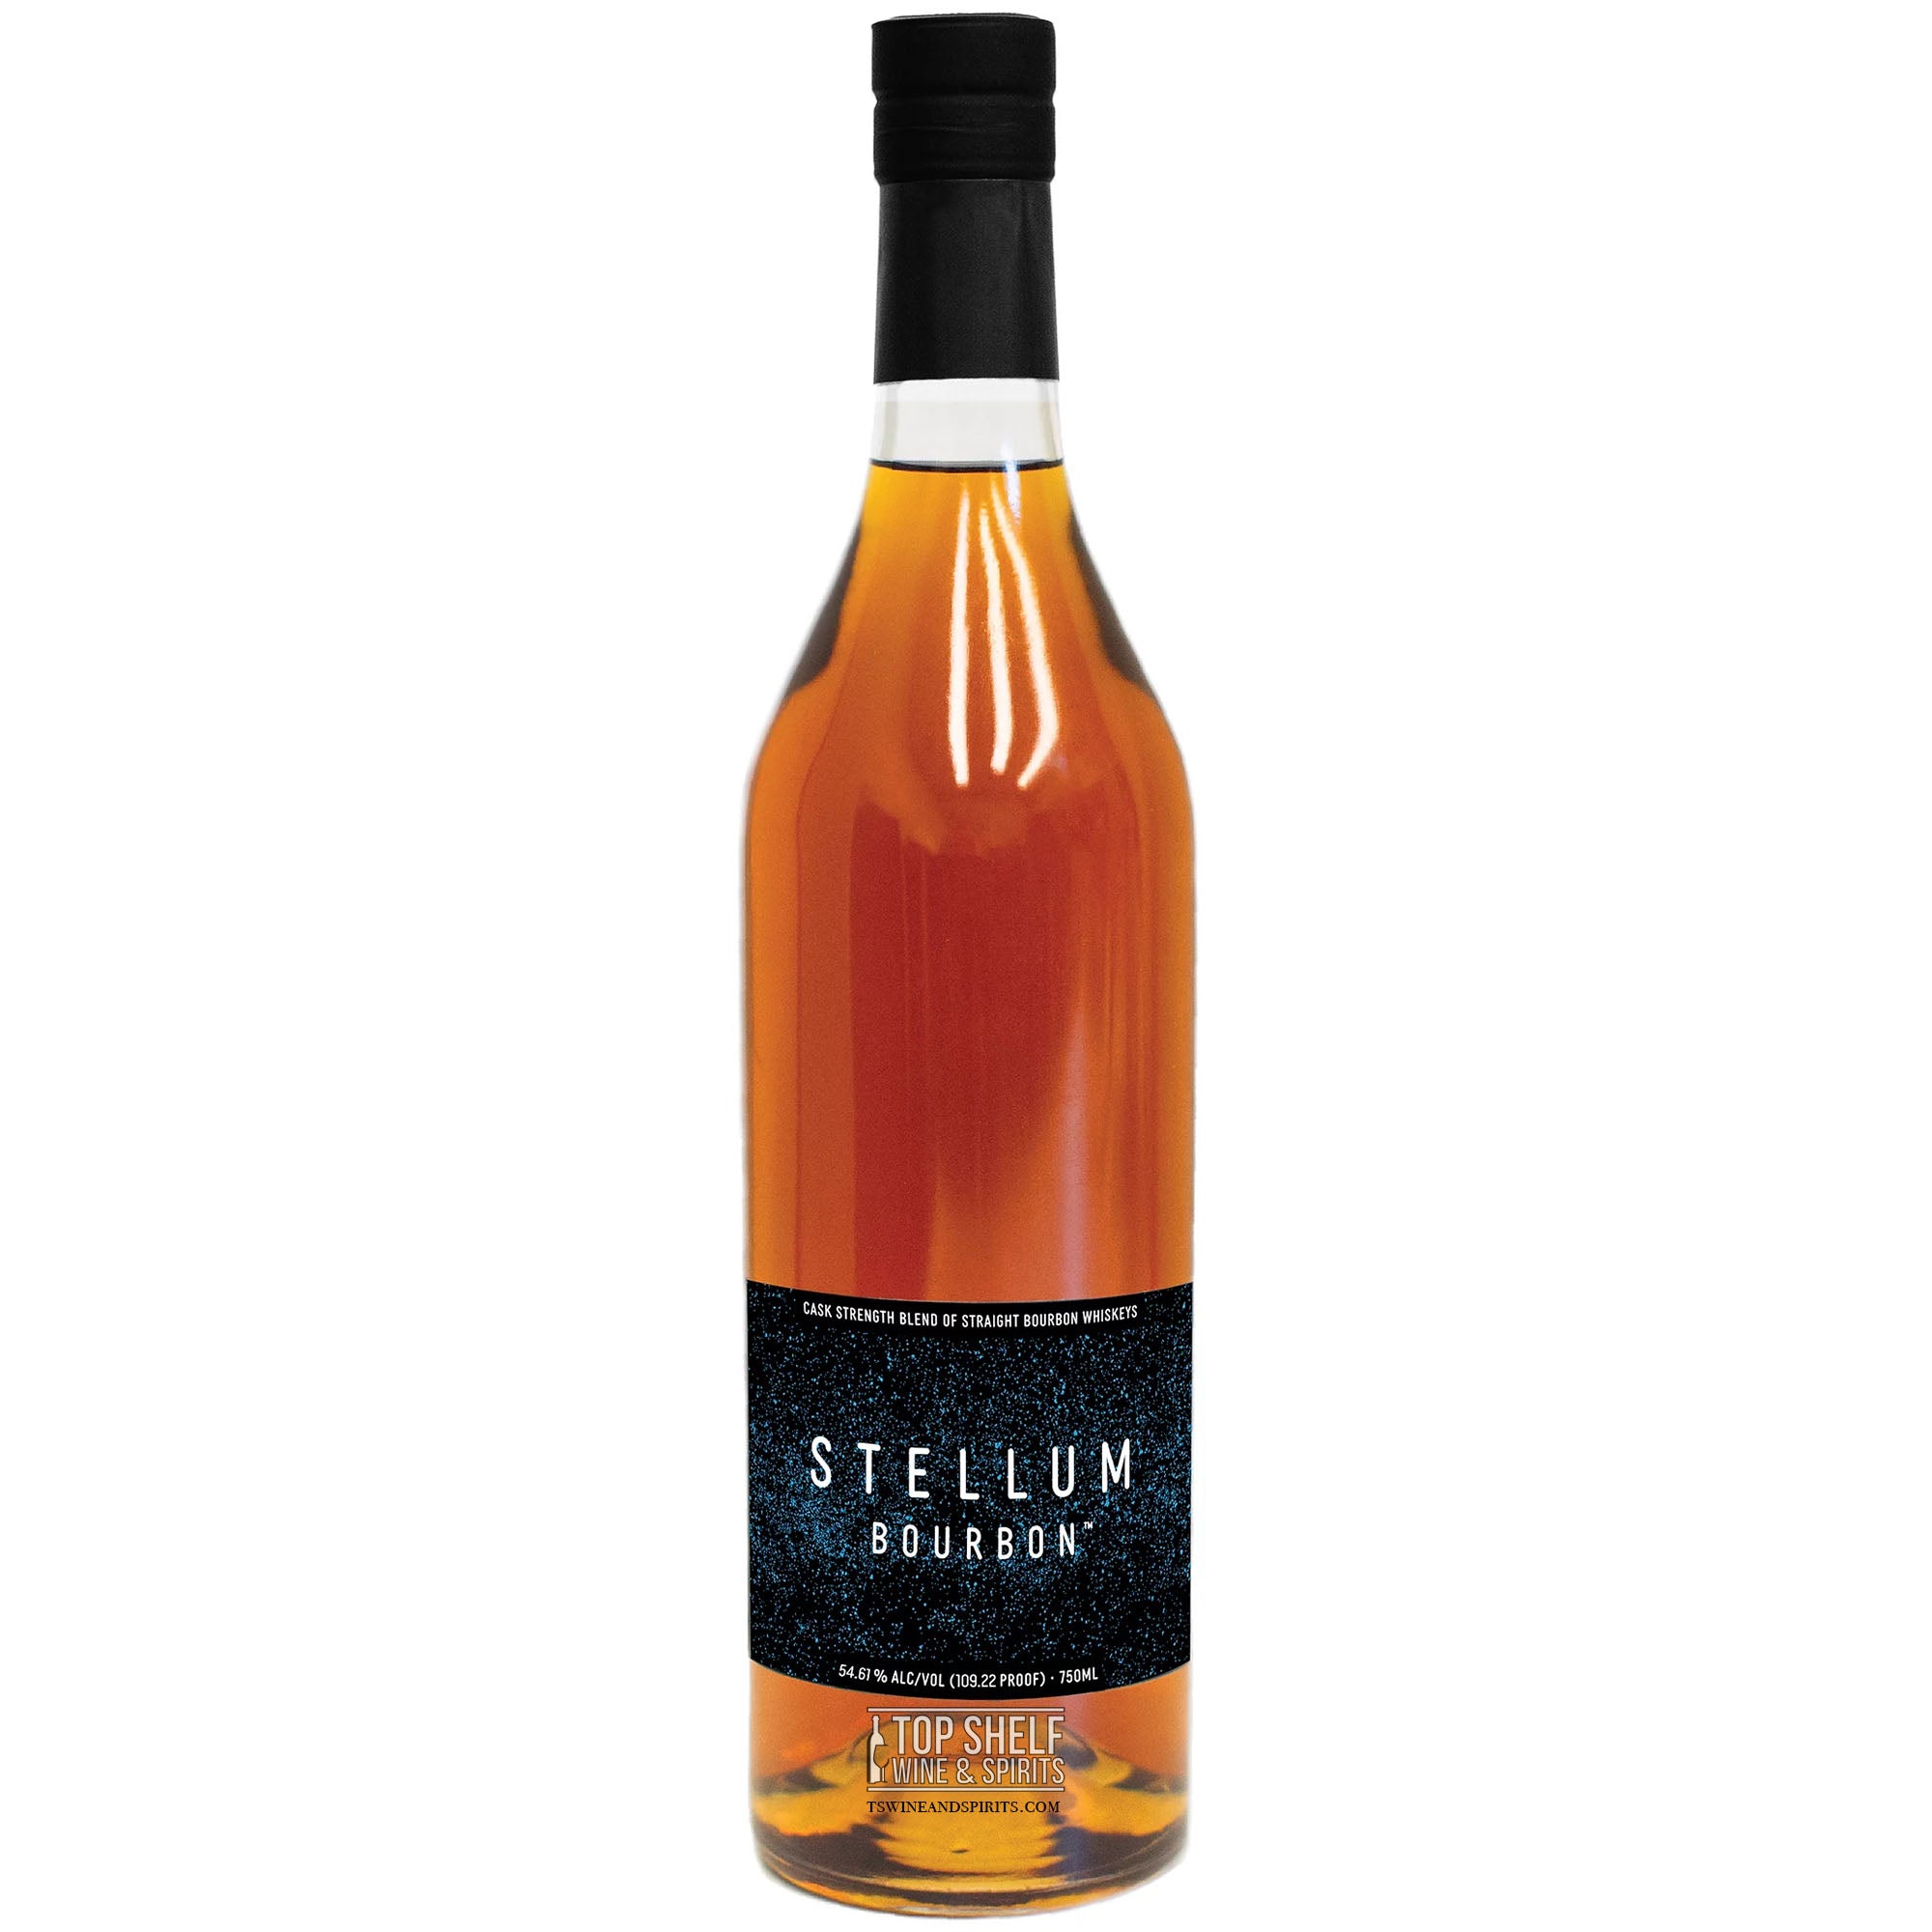 Stellum Black Label Bourbon (Cask Strength)